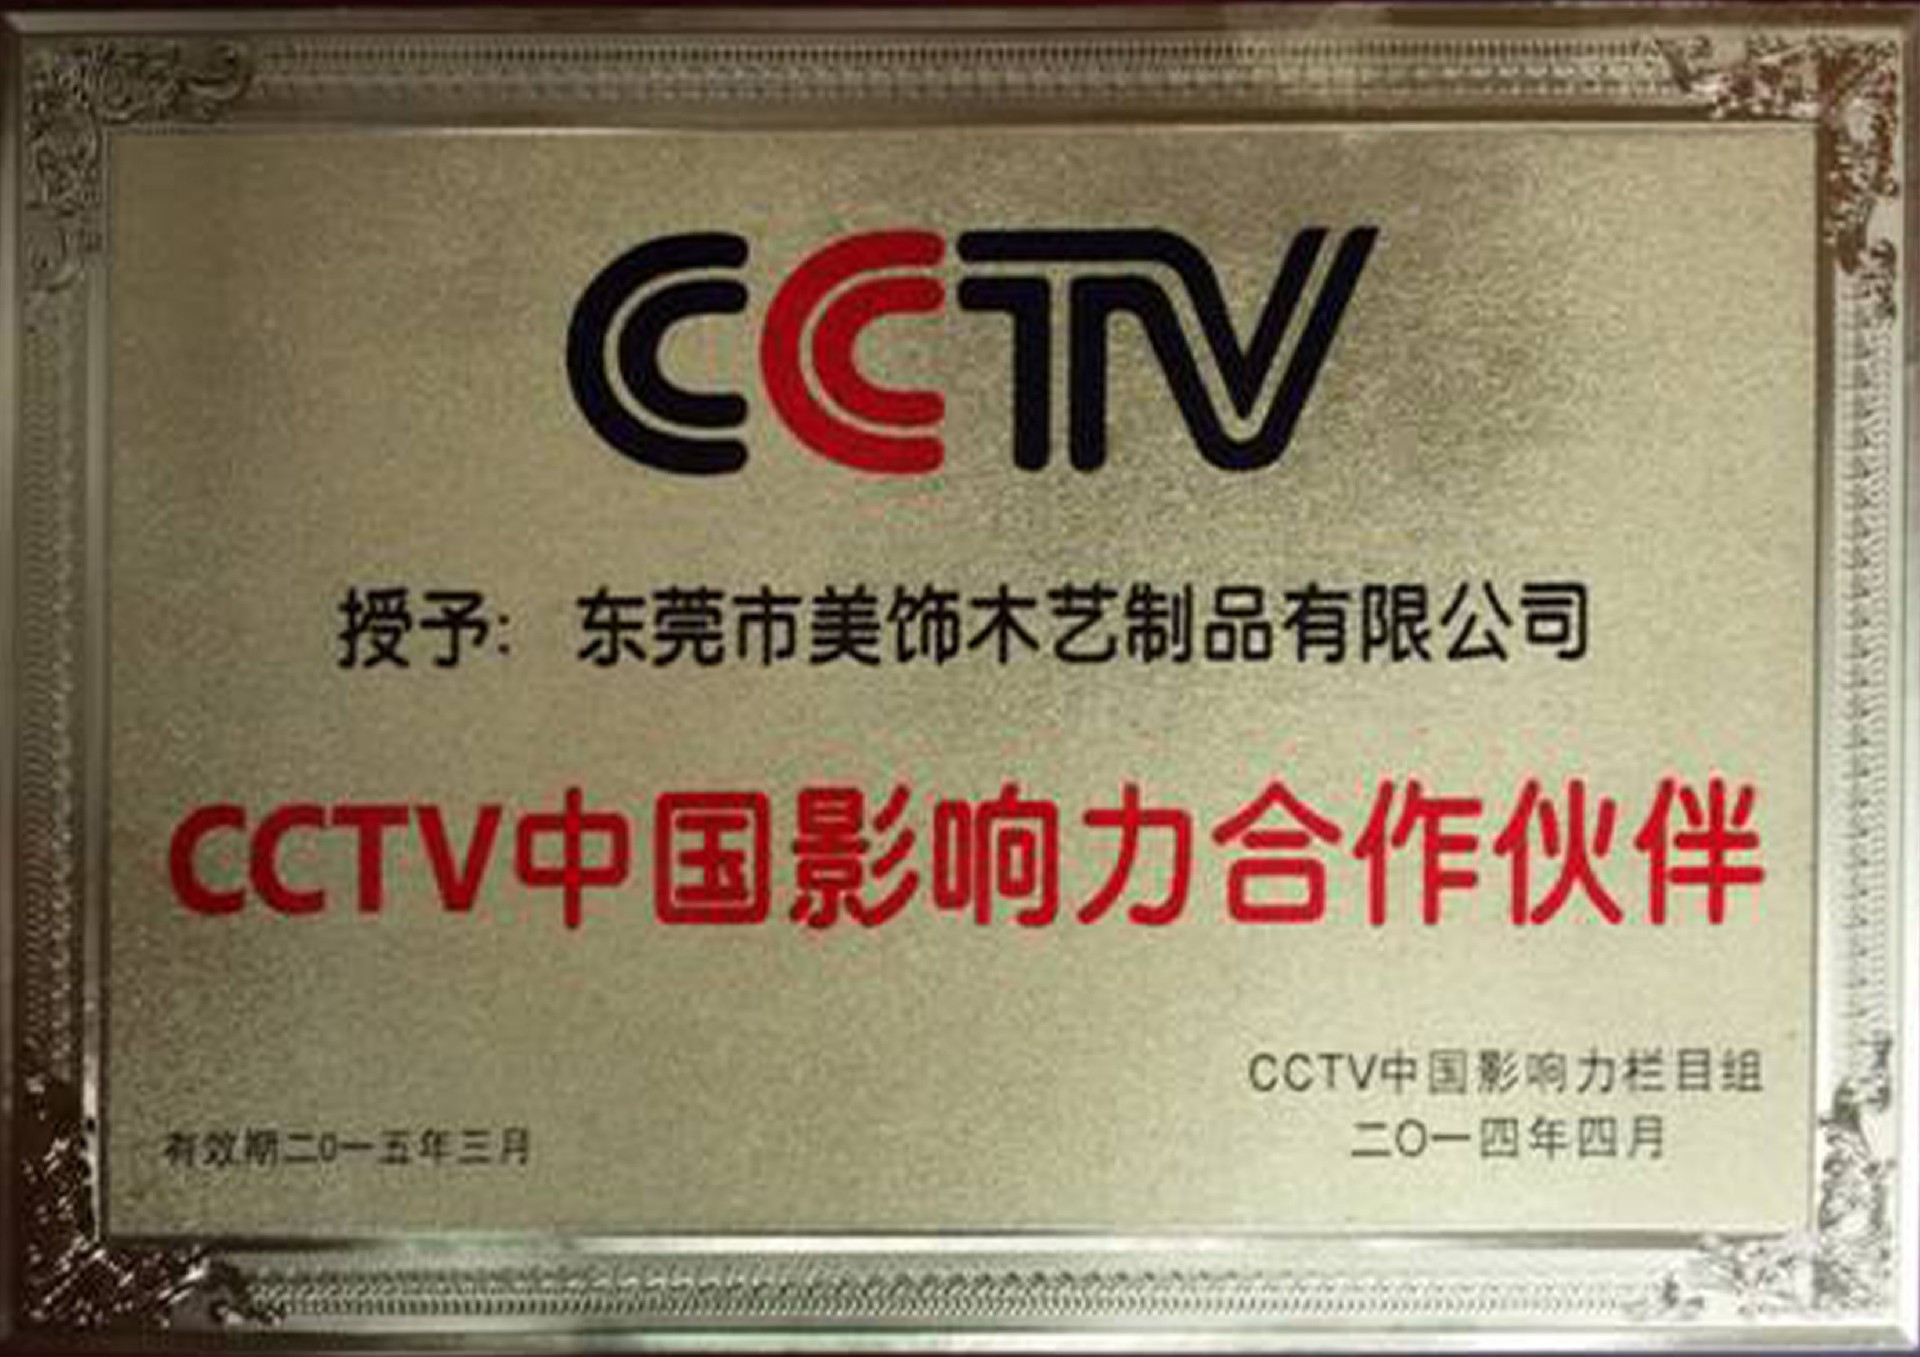 CCTV中国影响力合作伙伴